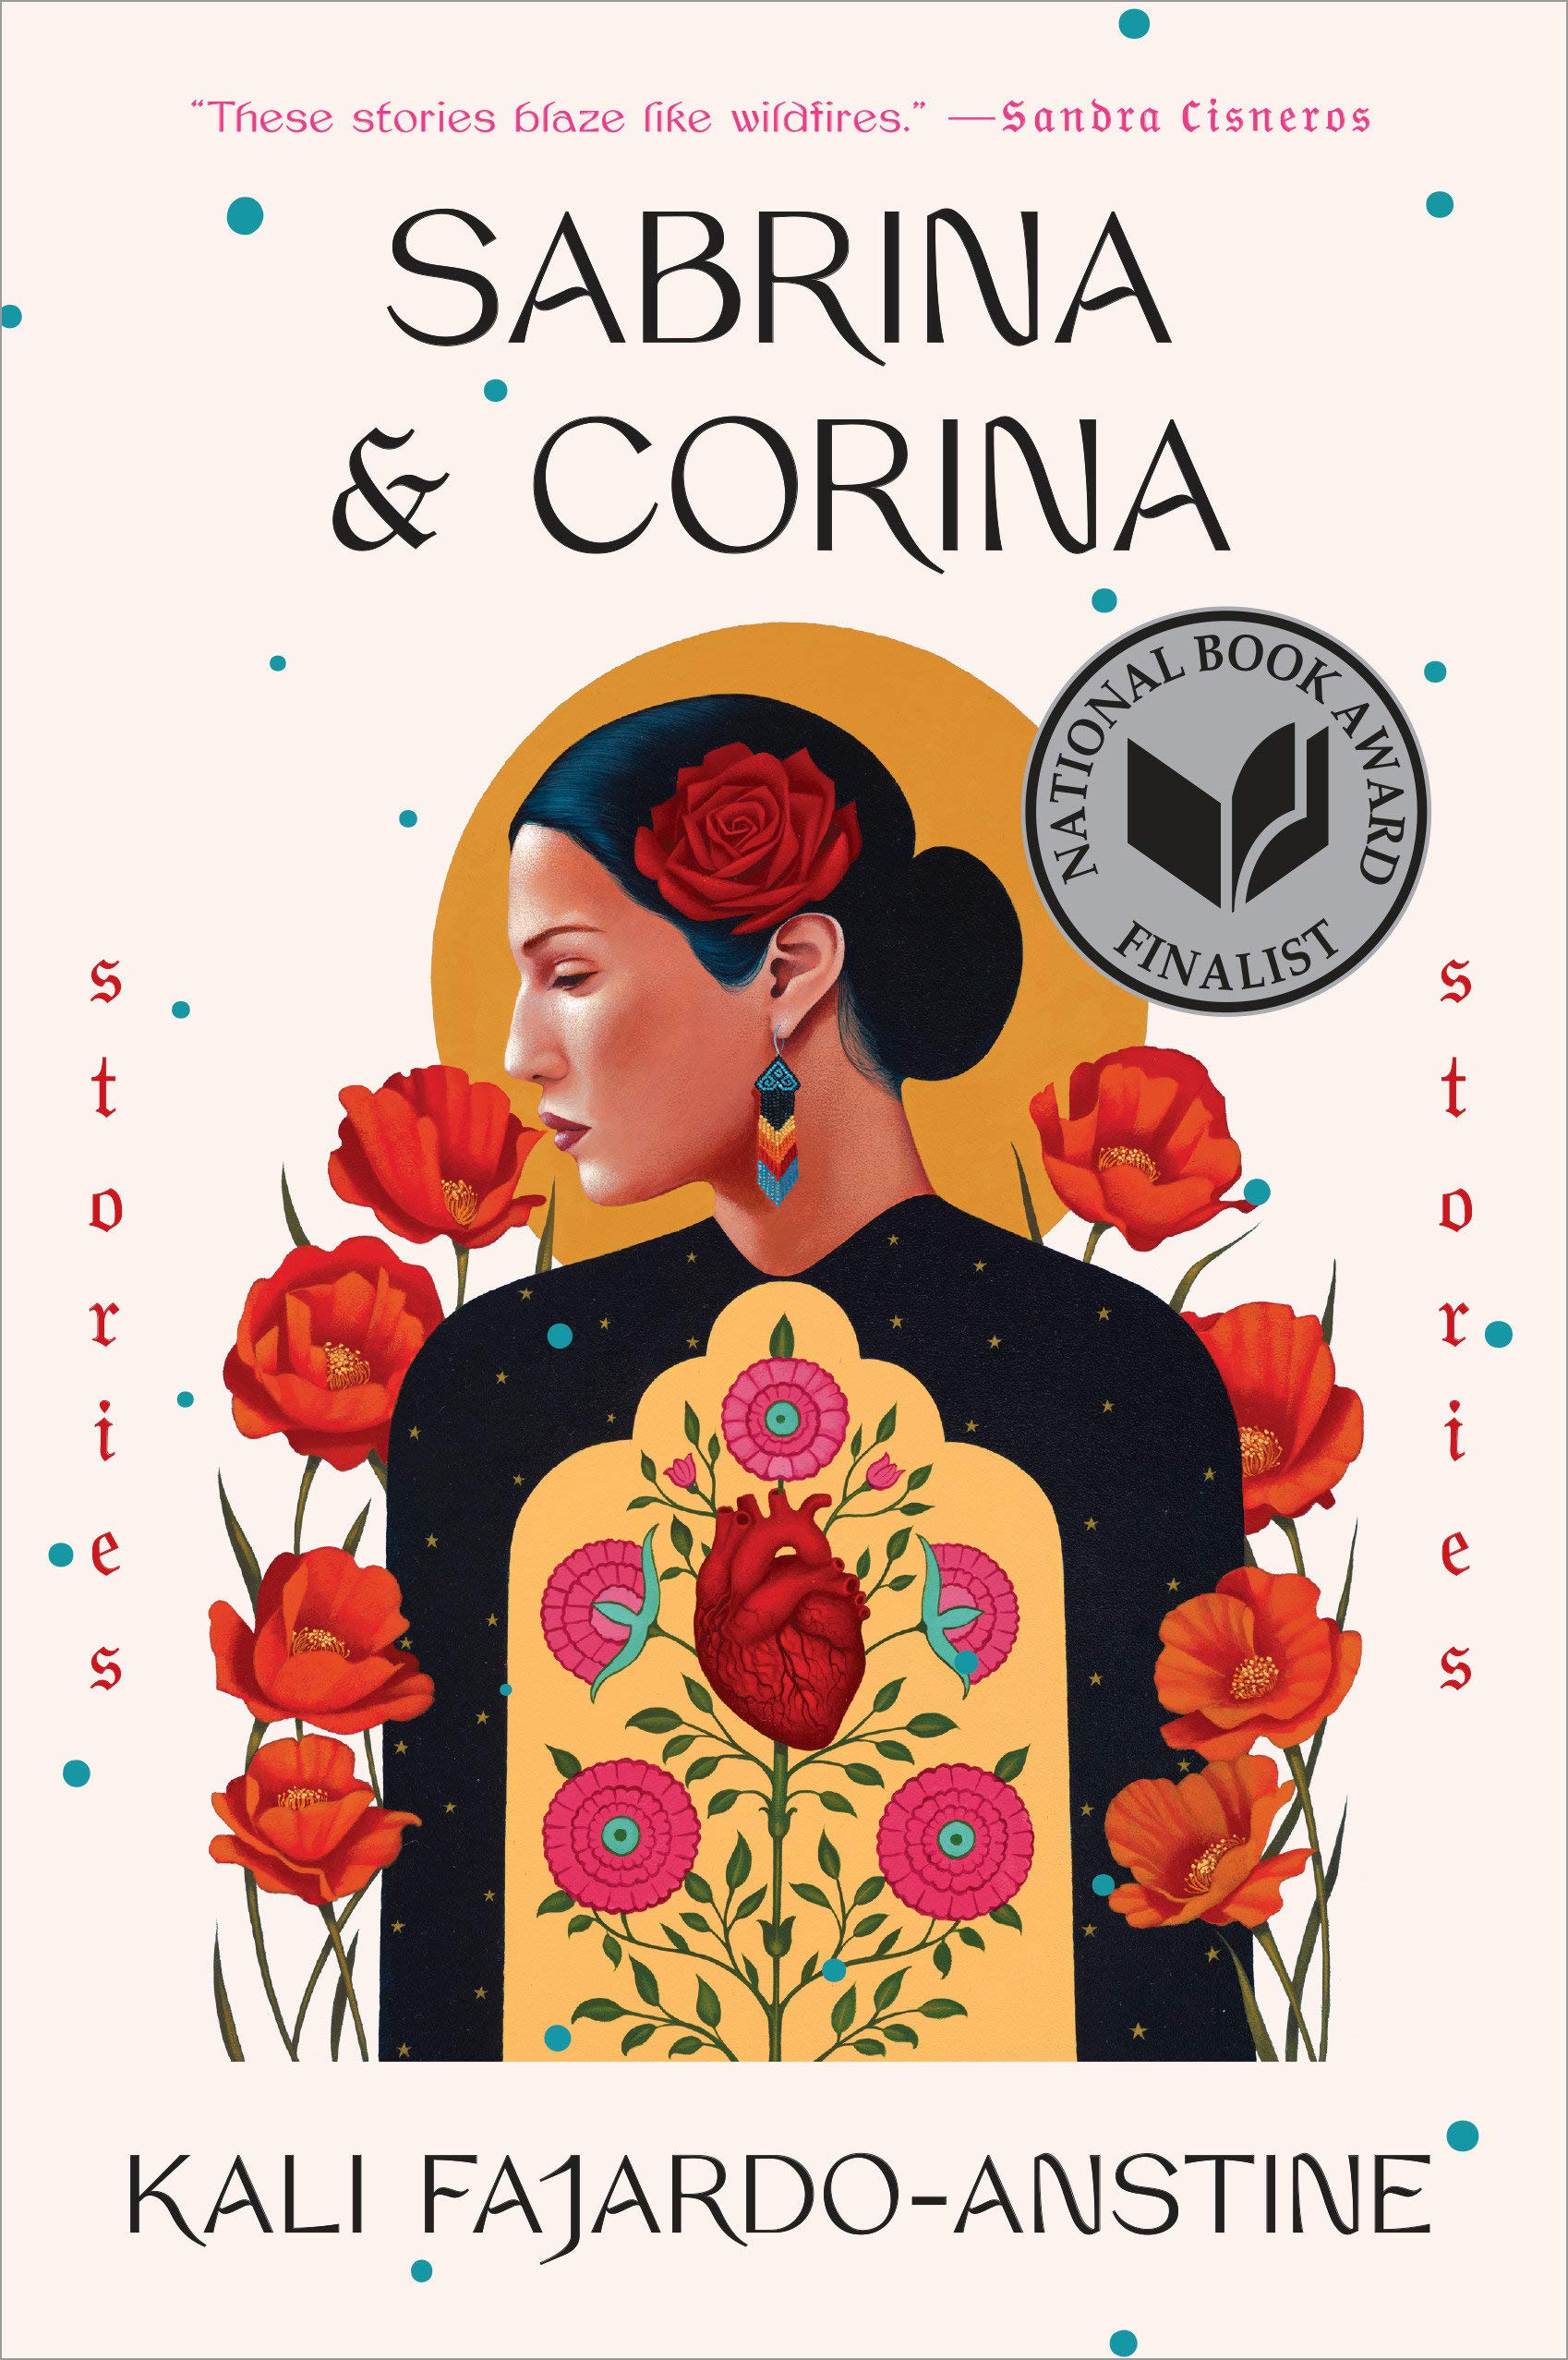 Cover of "Sabrina & Corina" by Kali Fajardo-Anstine